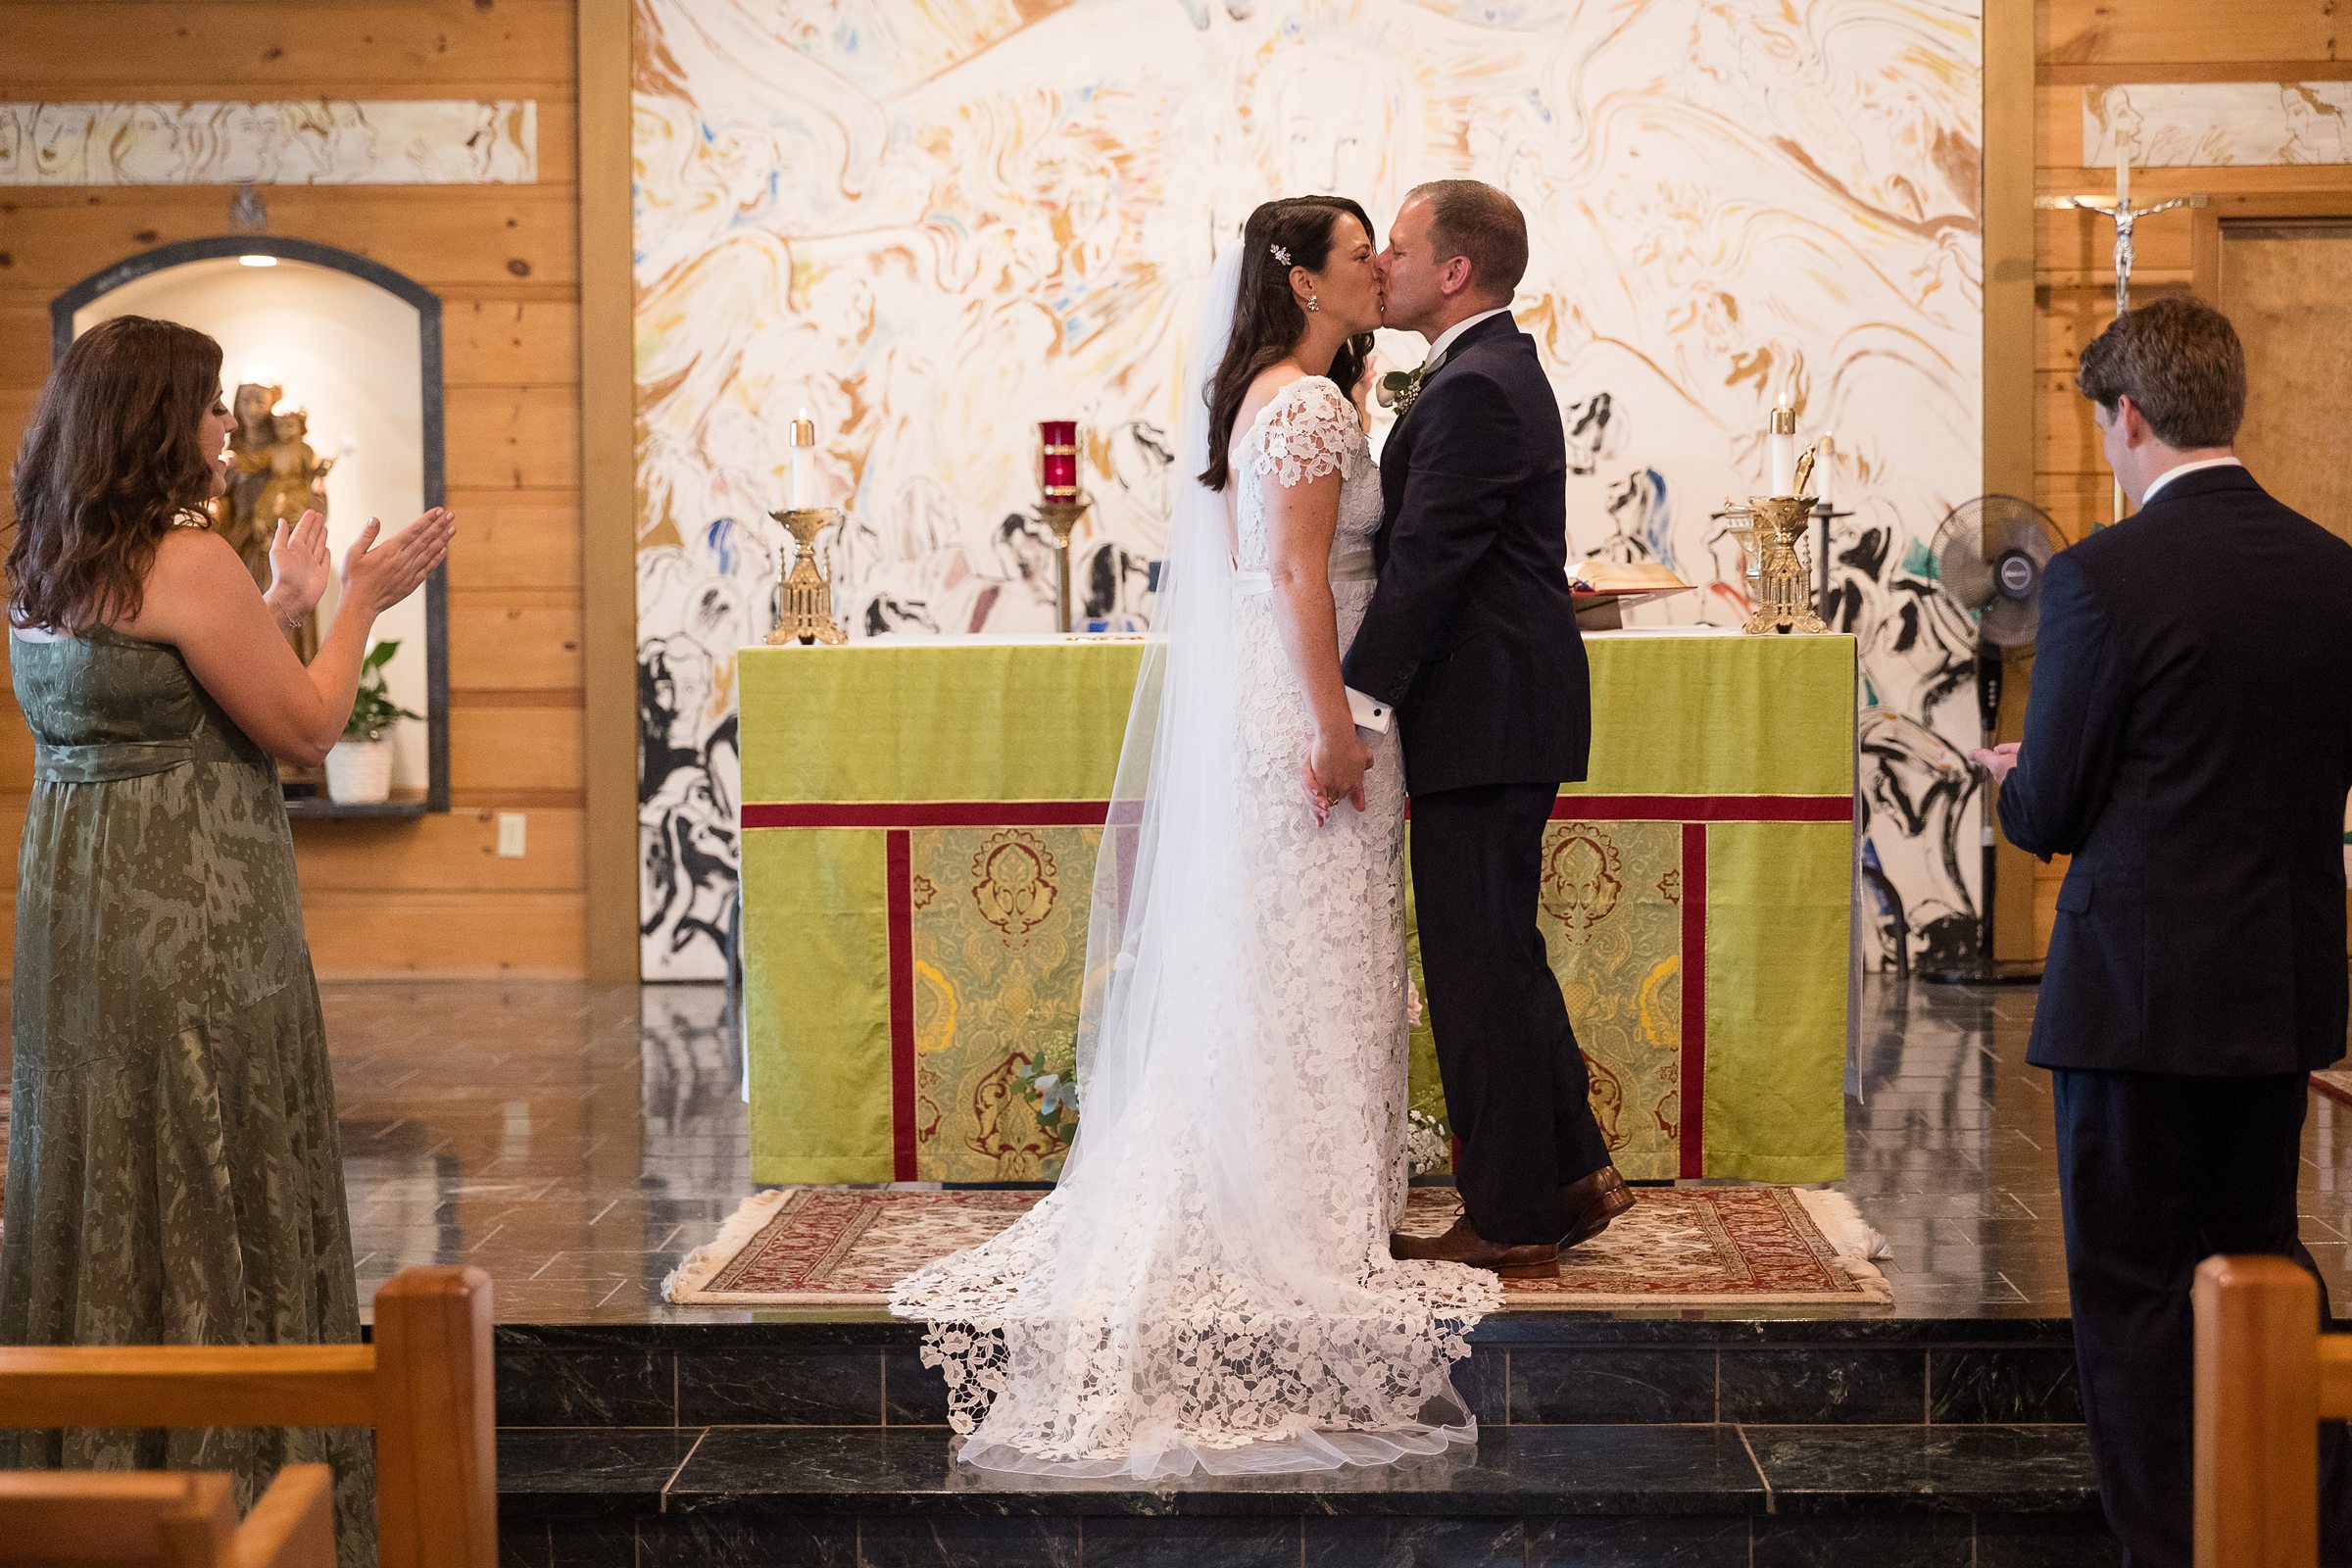 Catholic wedding ceremony in Stowe, VT